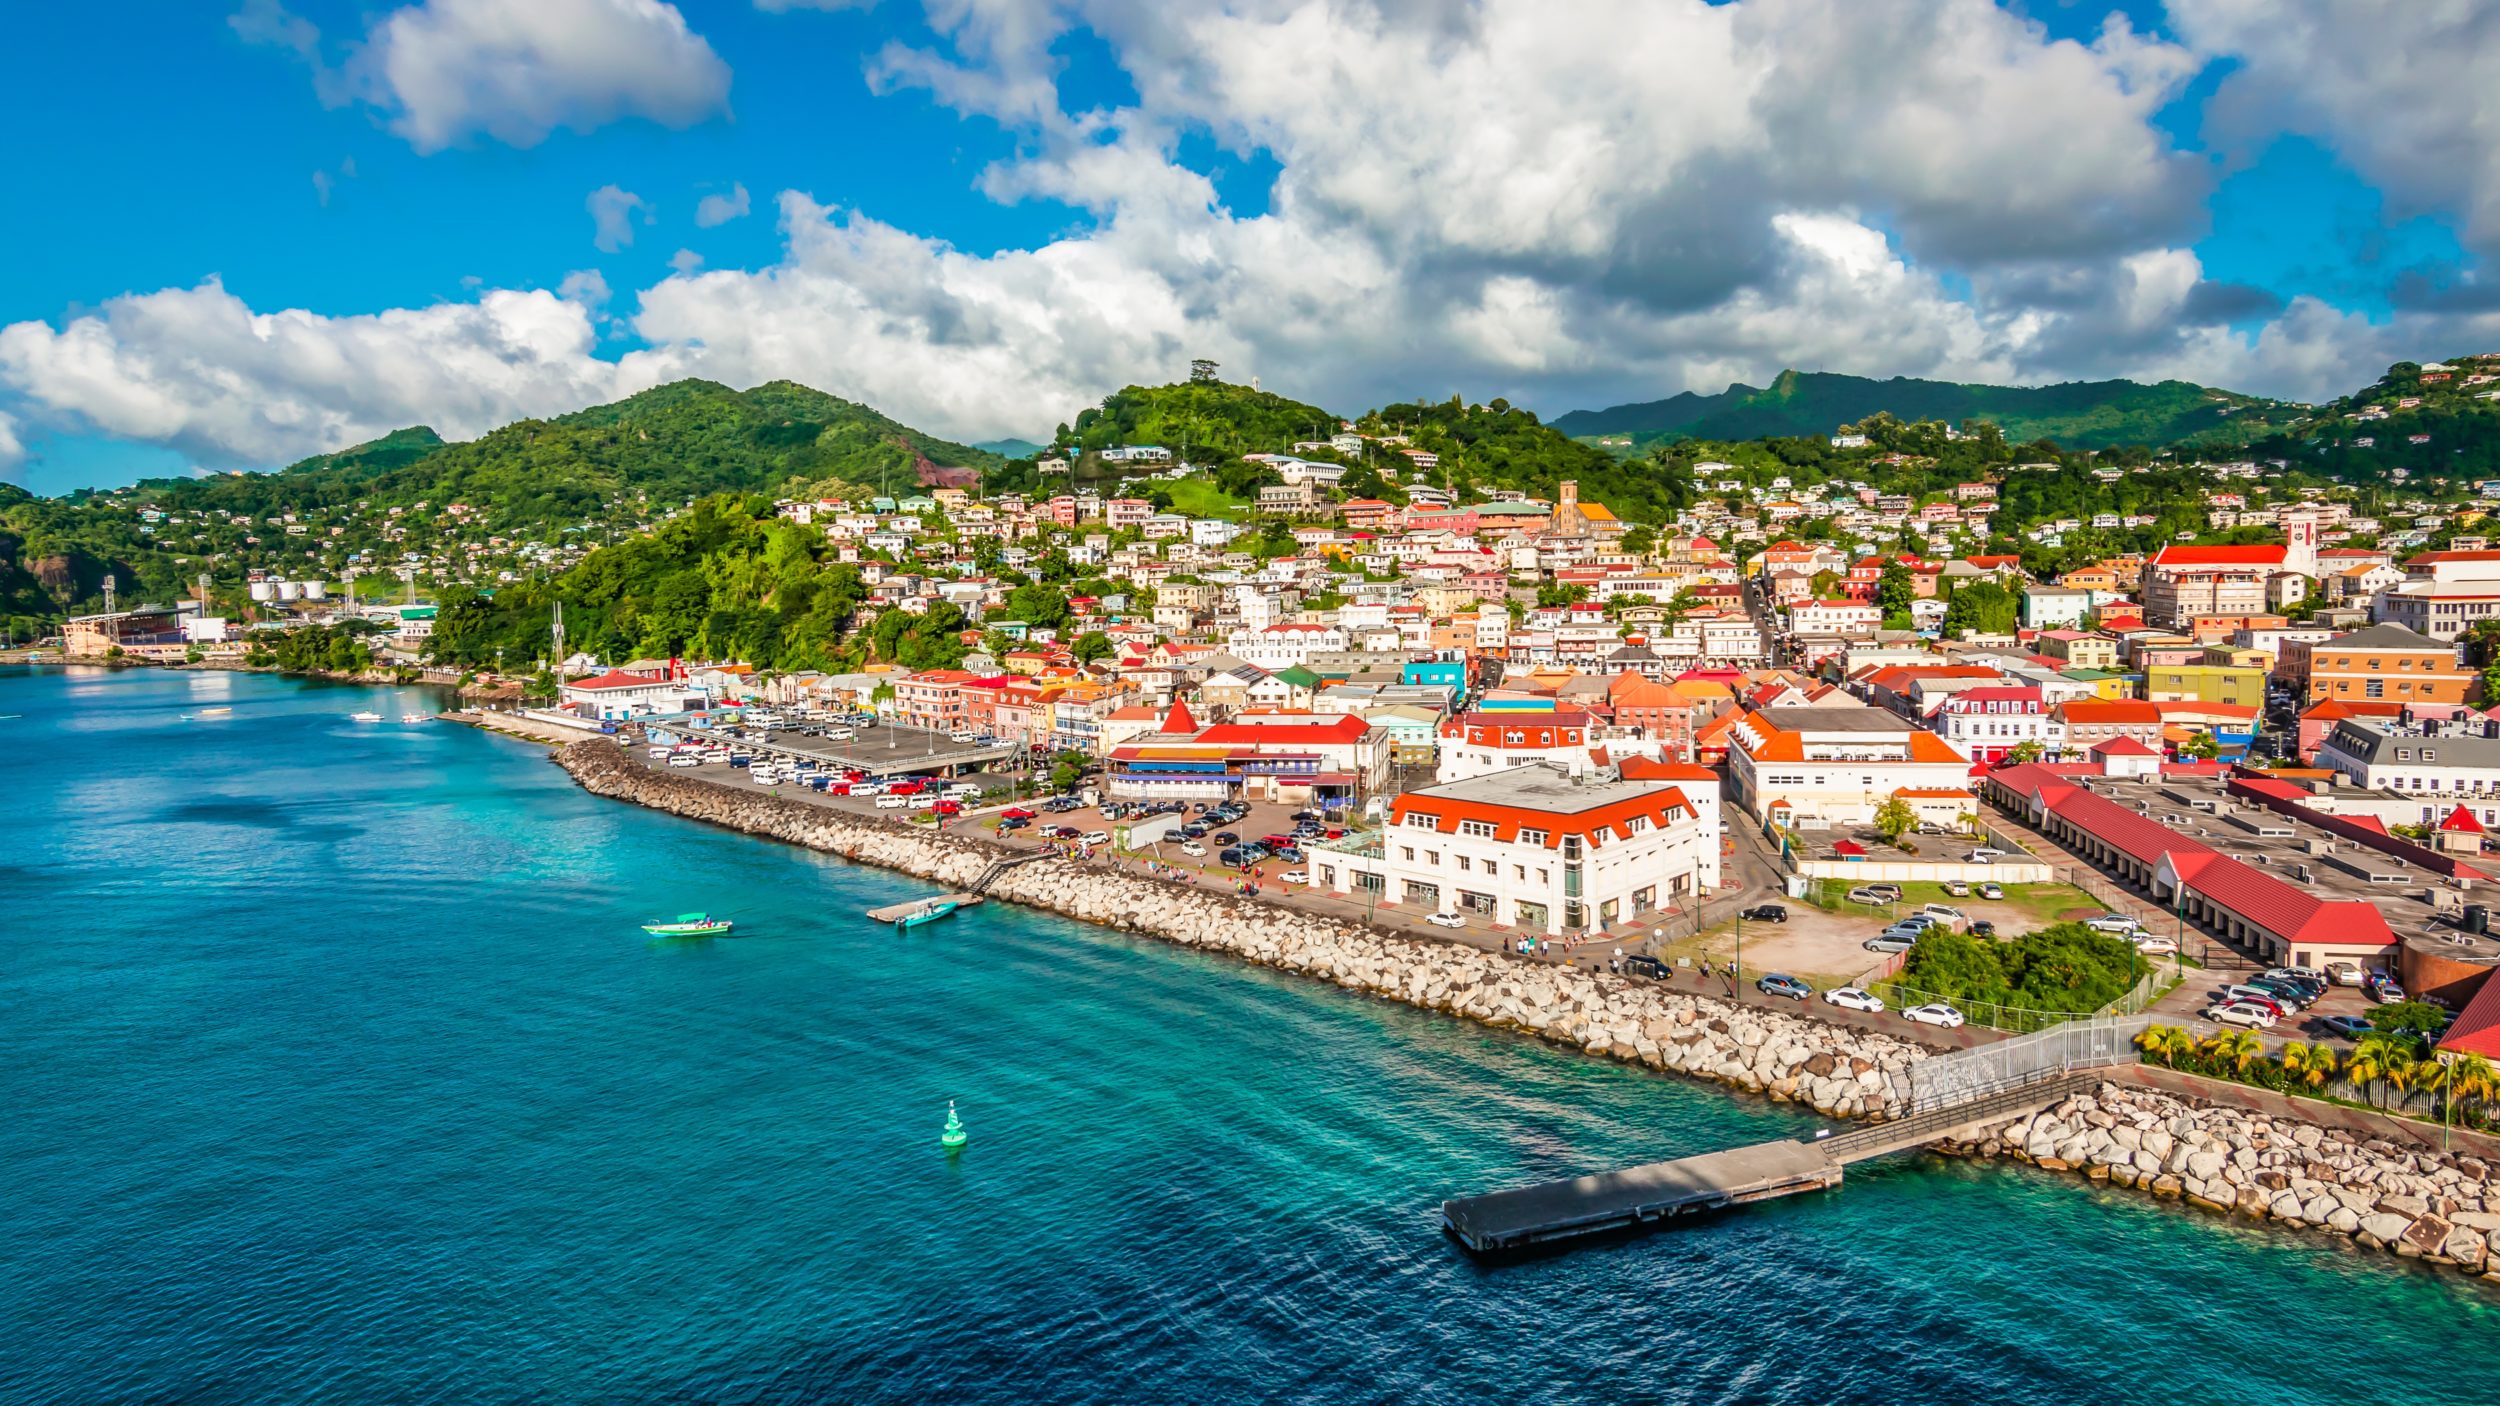 Grenada [Shutterstock]